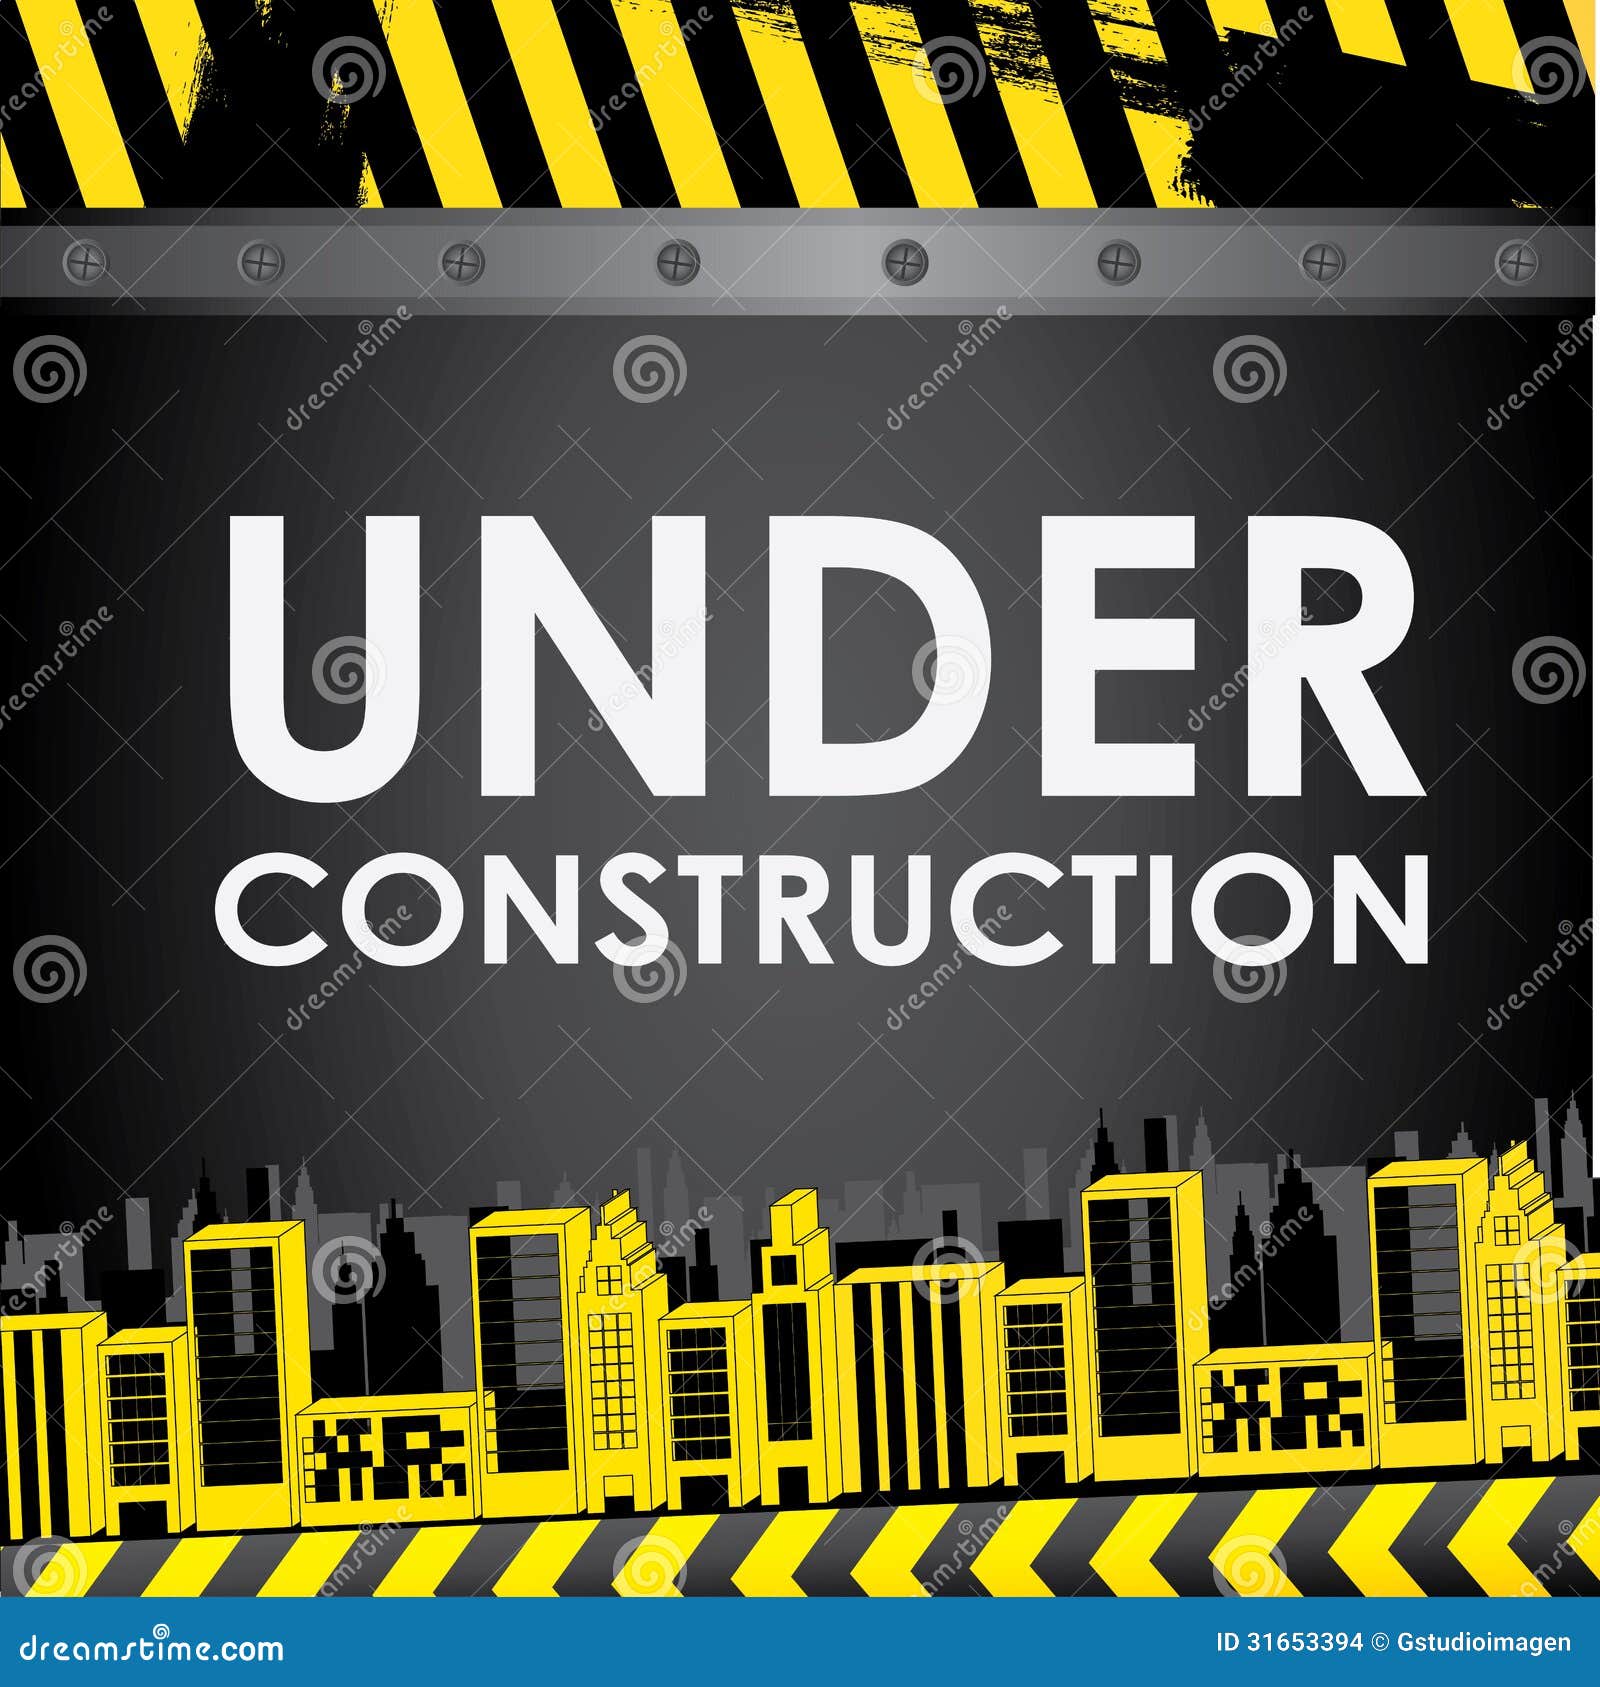 Under construction stock vector. Illustration of city - 31653394